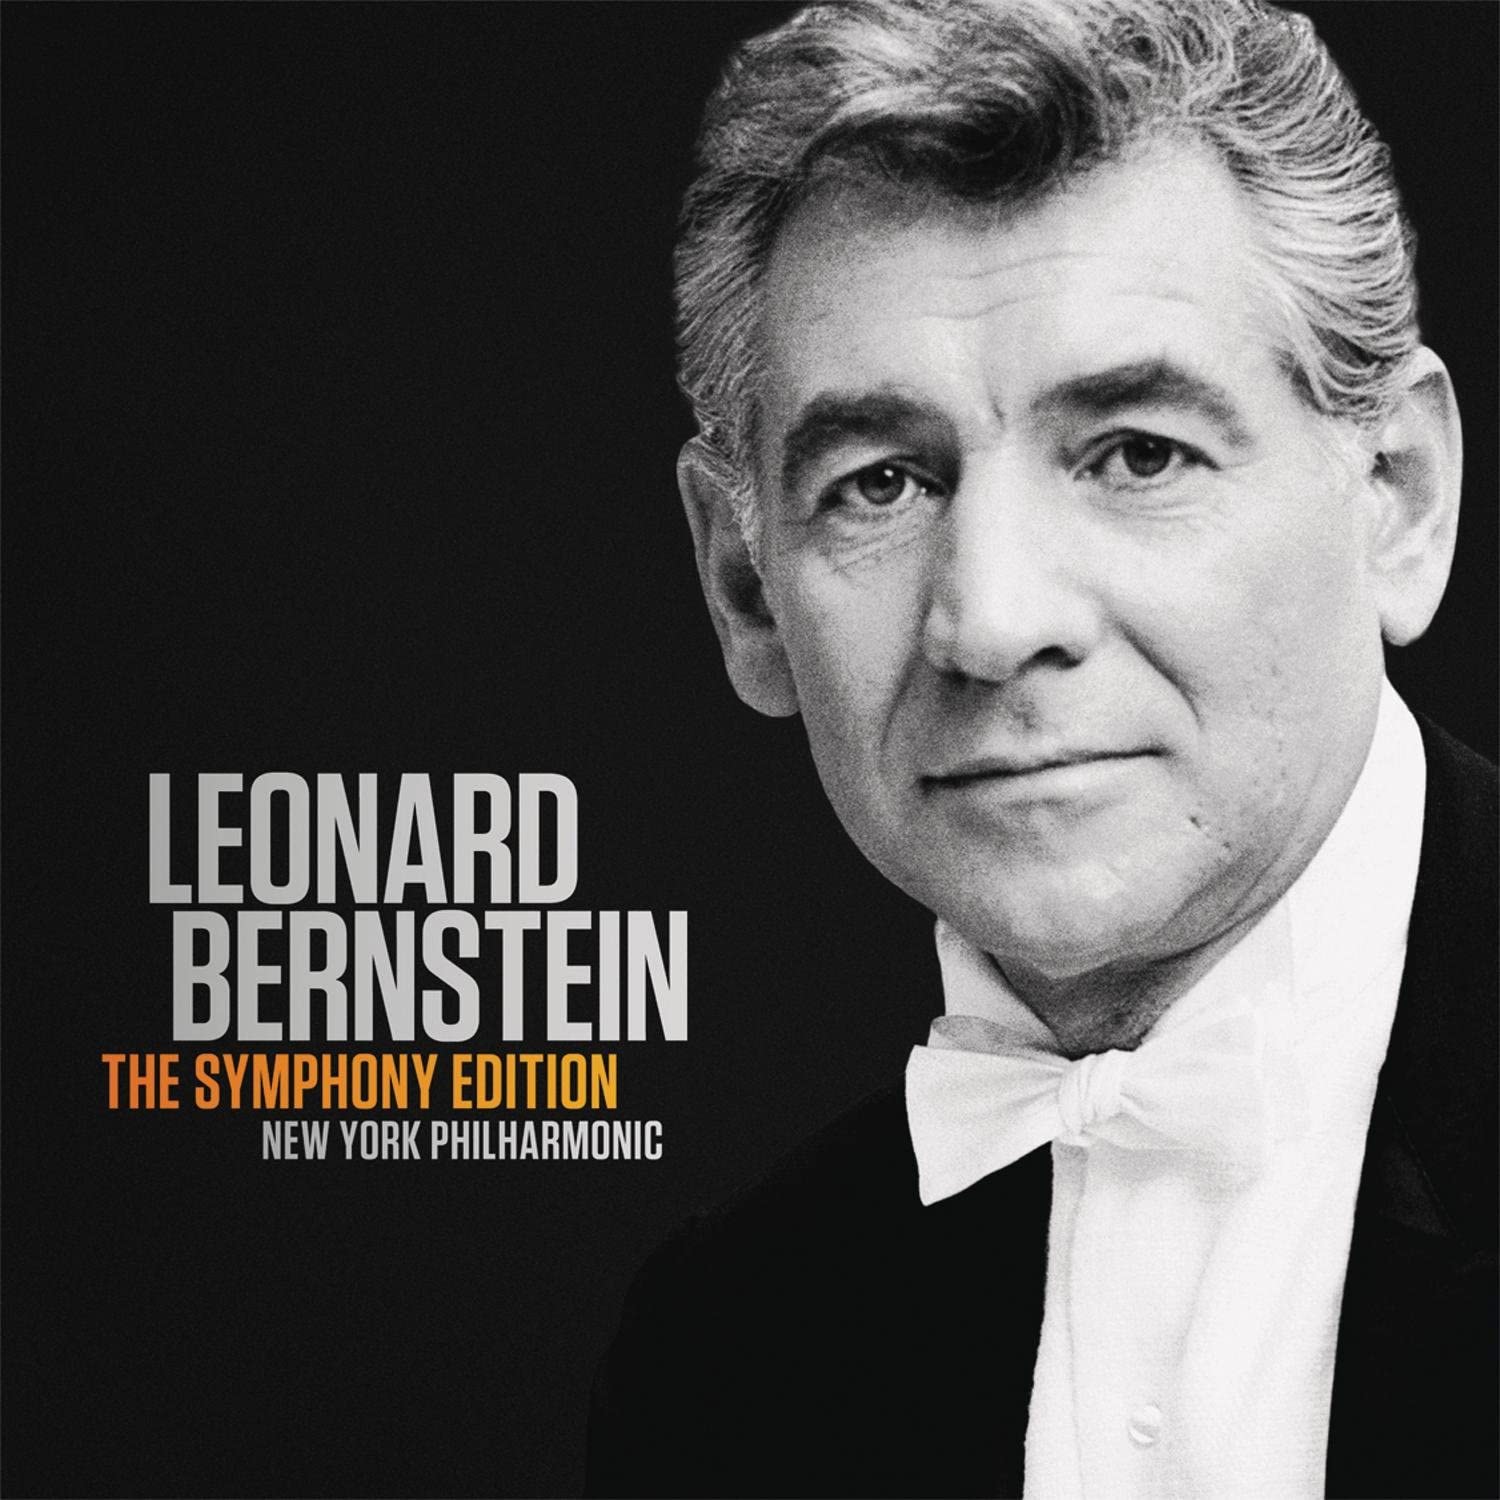 『Bernstein Symphony Edition』